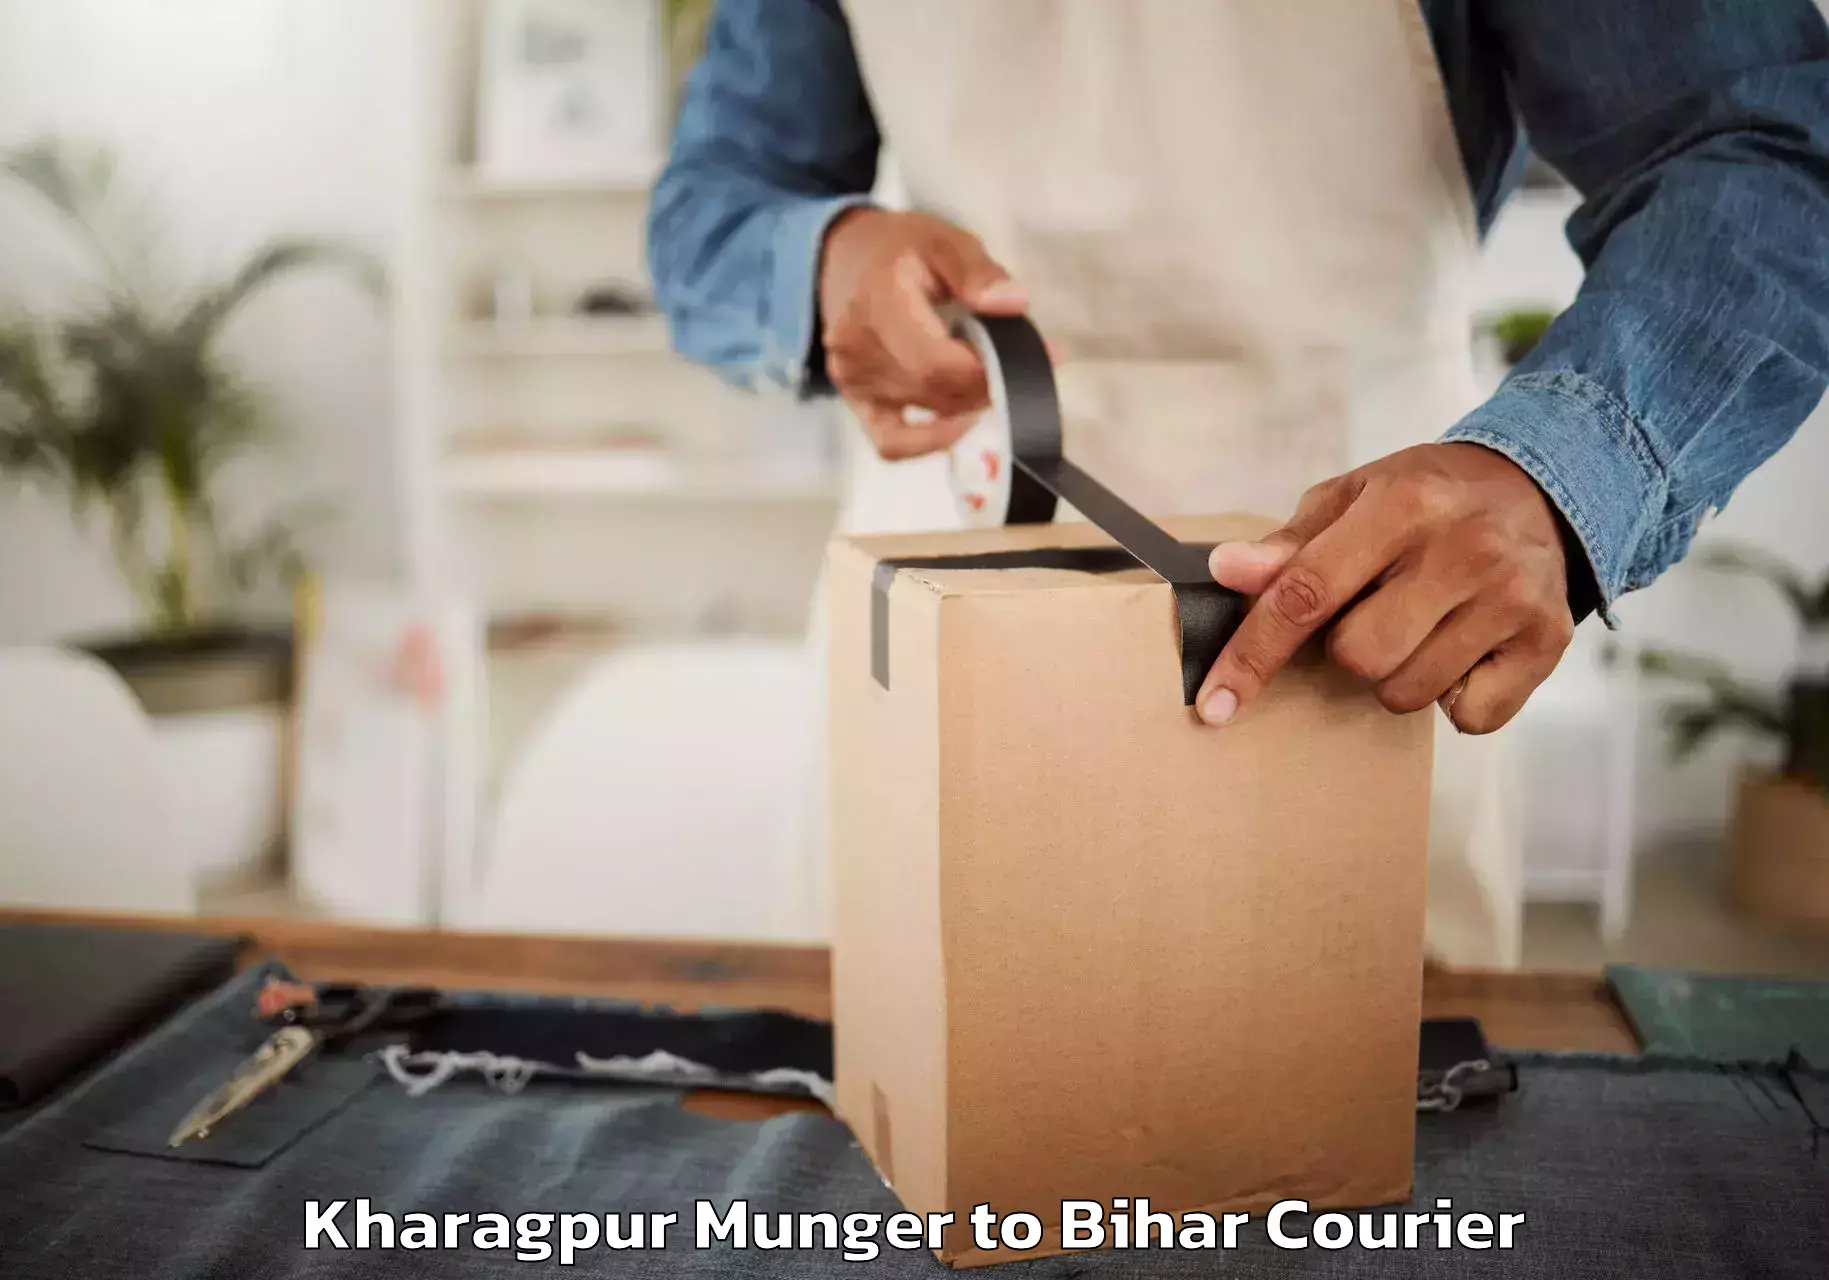 Furniture moving specialists Kharagpur Munger to Katoria